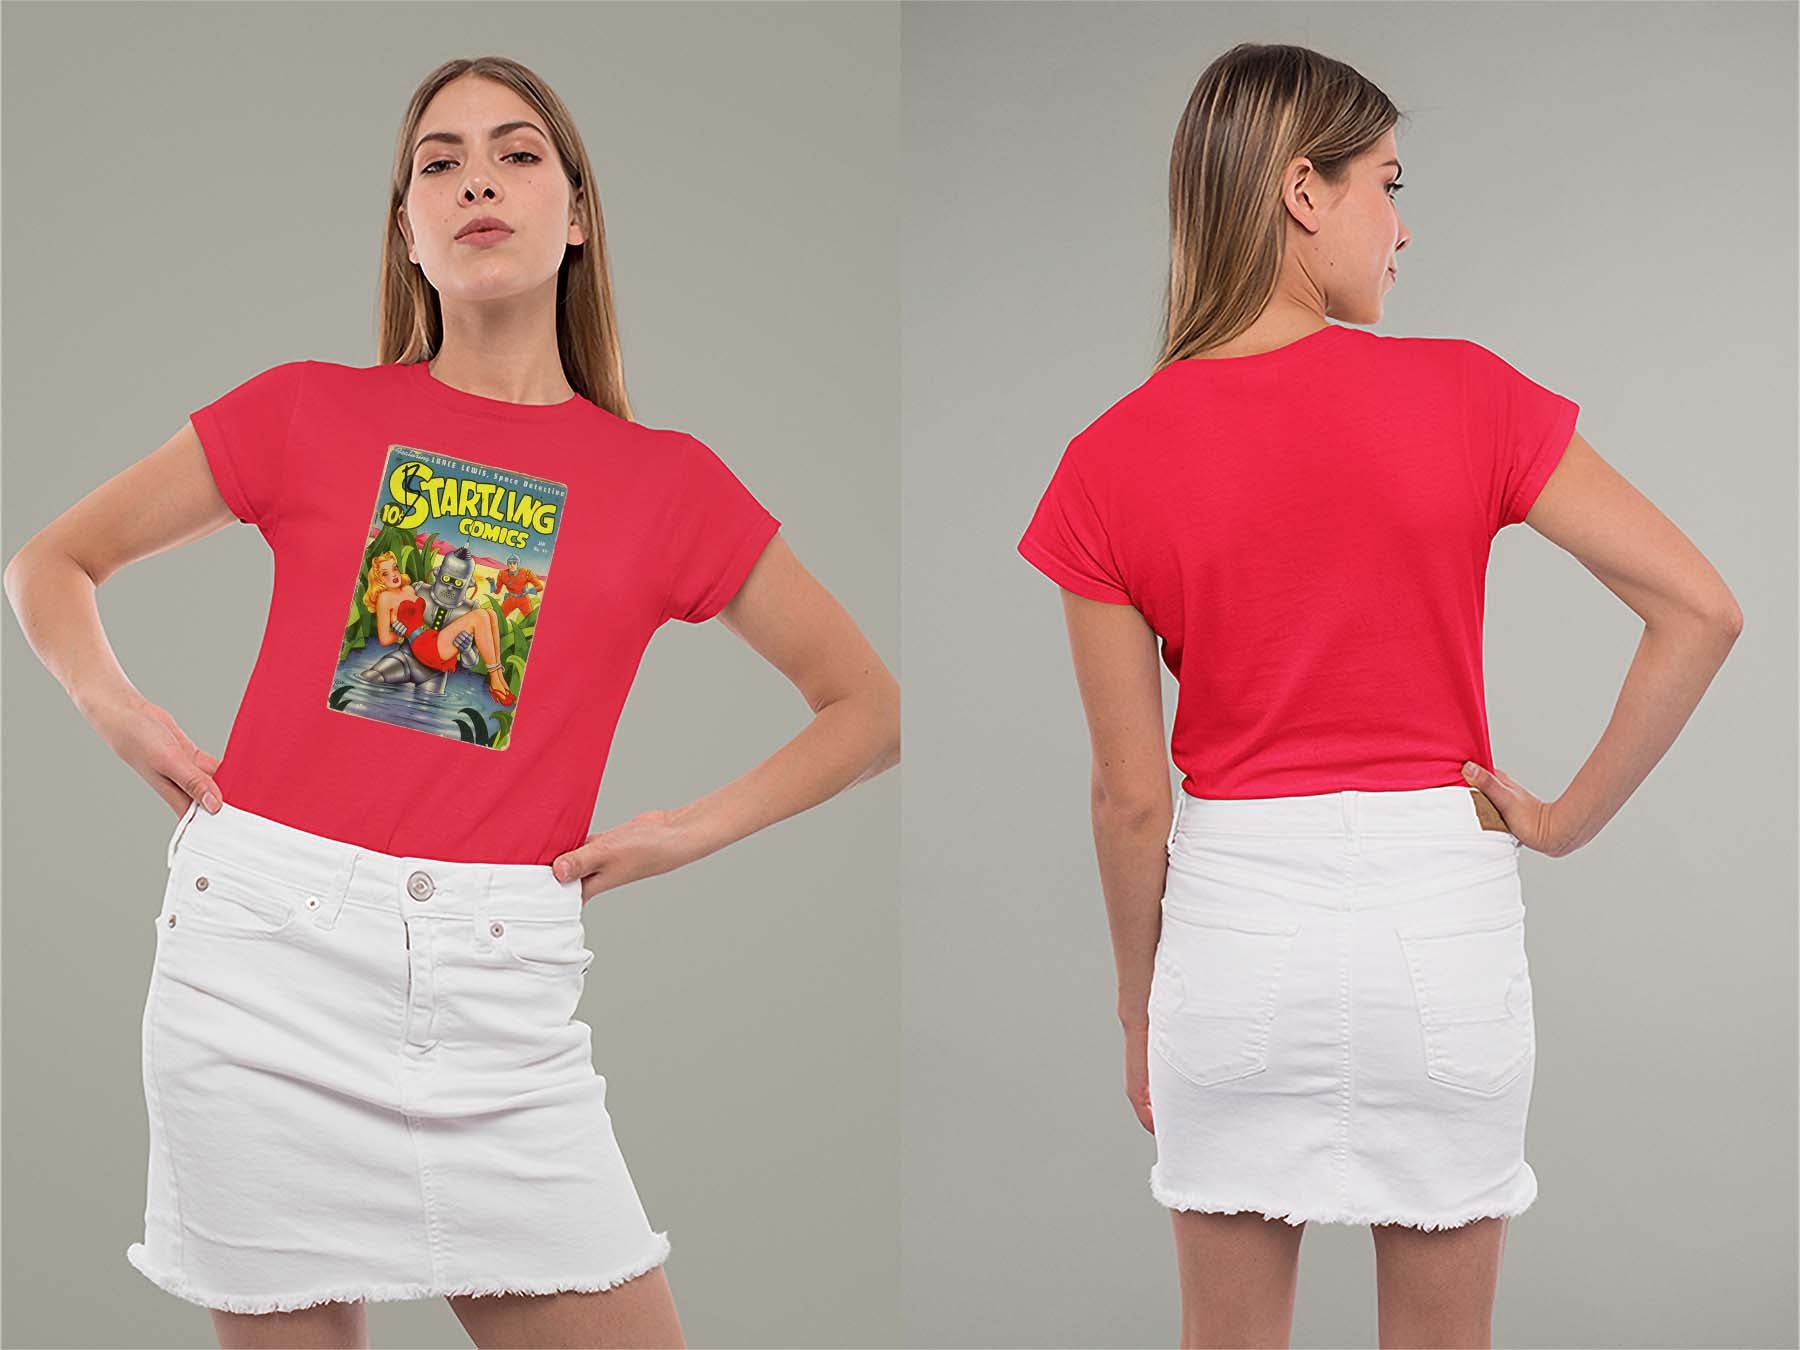 Startling Comics No39 Ladies Crew (Round) Neck Shirt Small Red